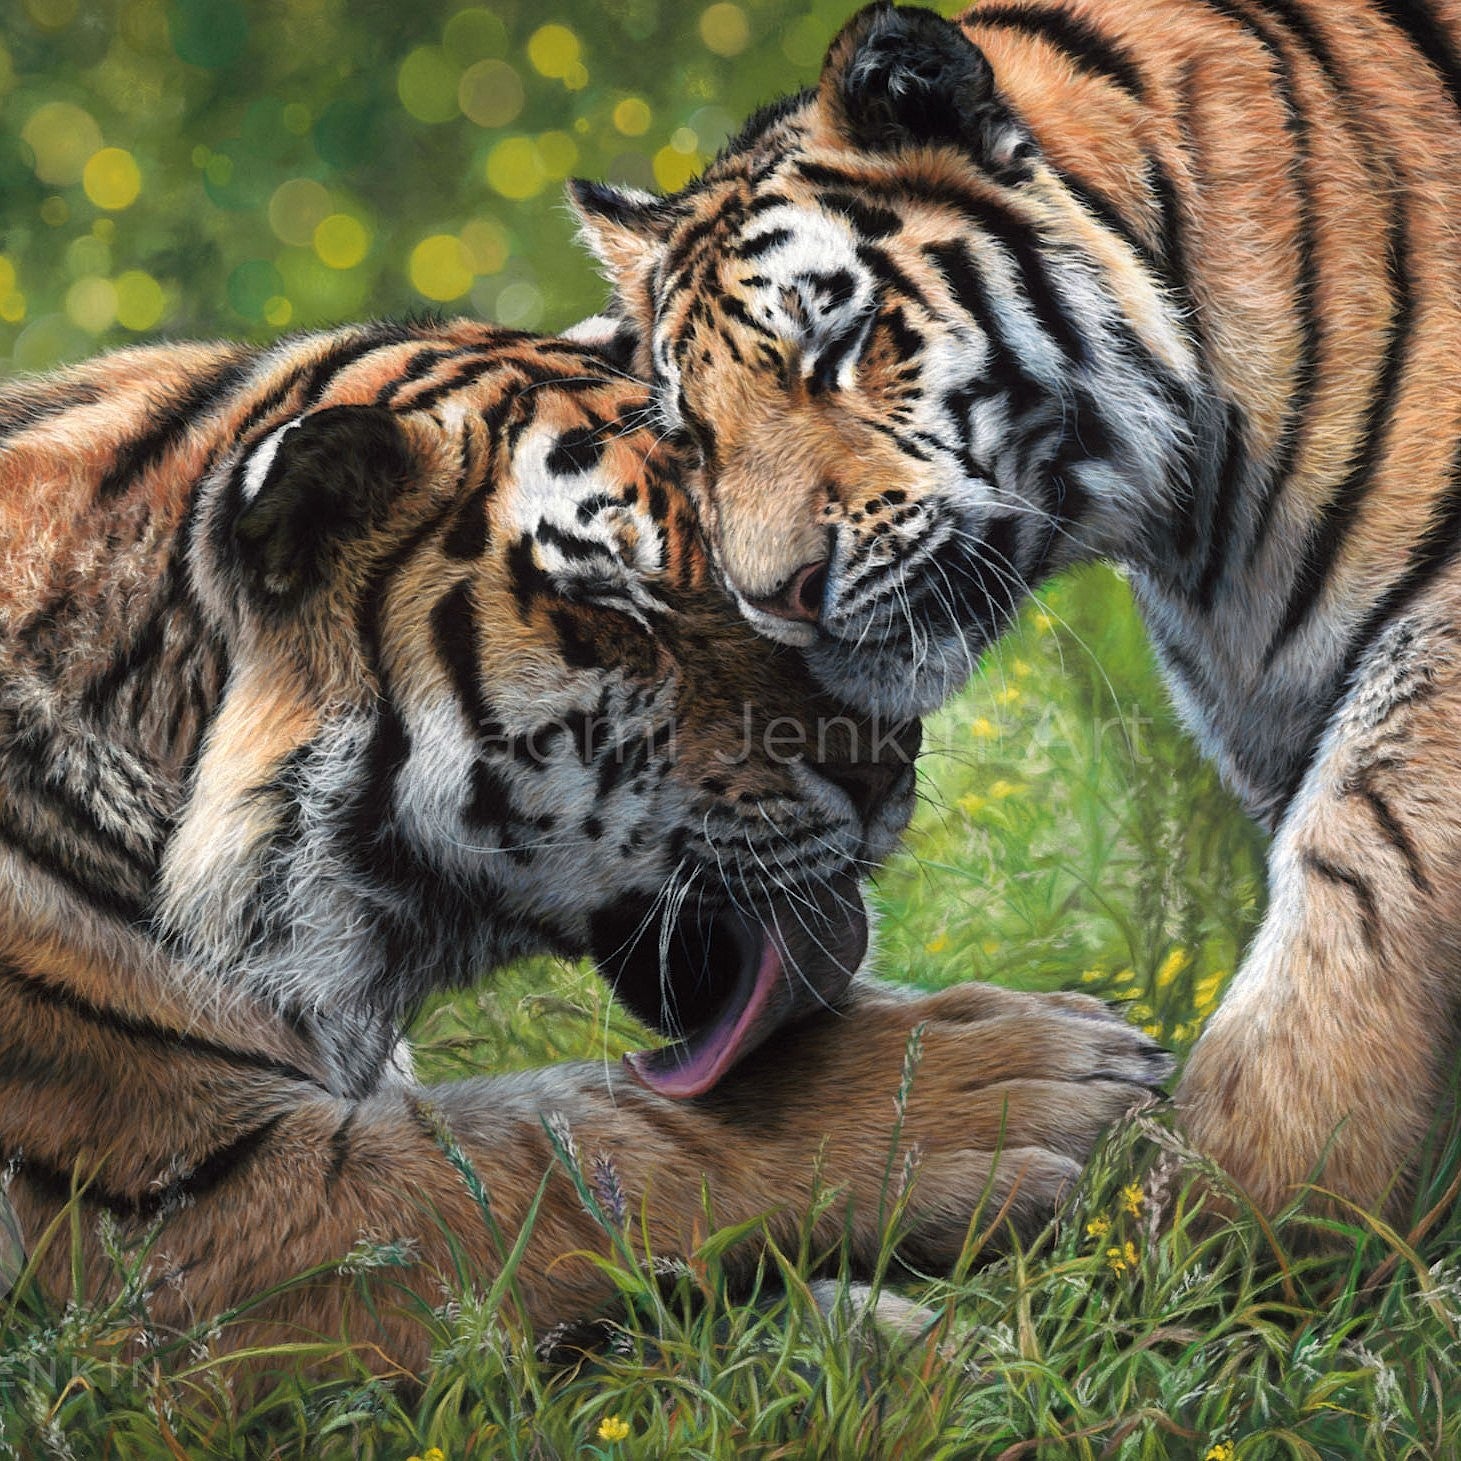 Original tiger painting "Devotion" by wildlife artist Naomi Jenkin. 